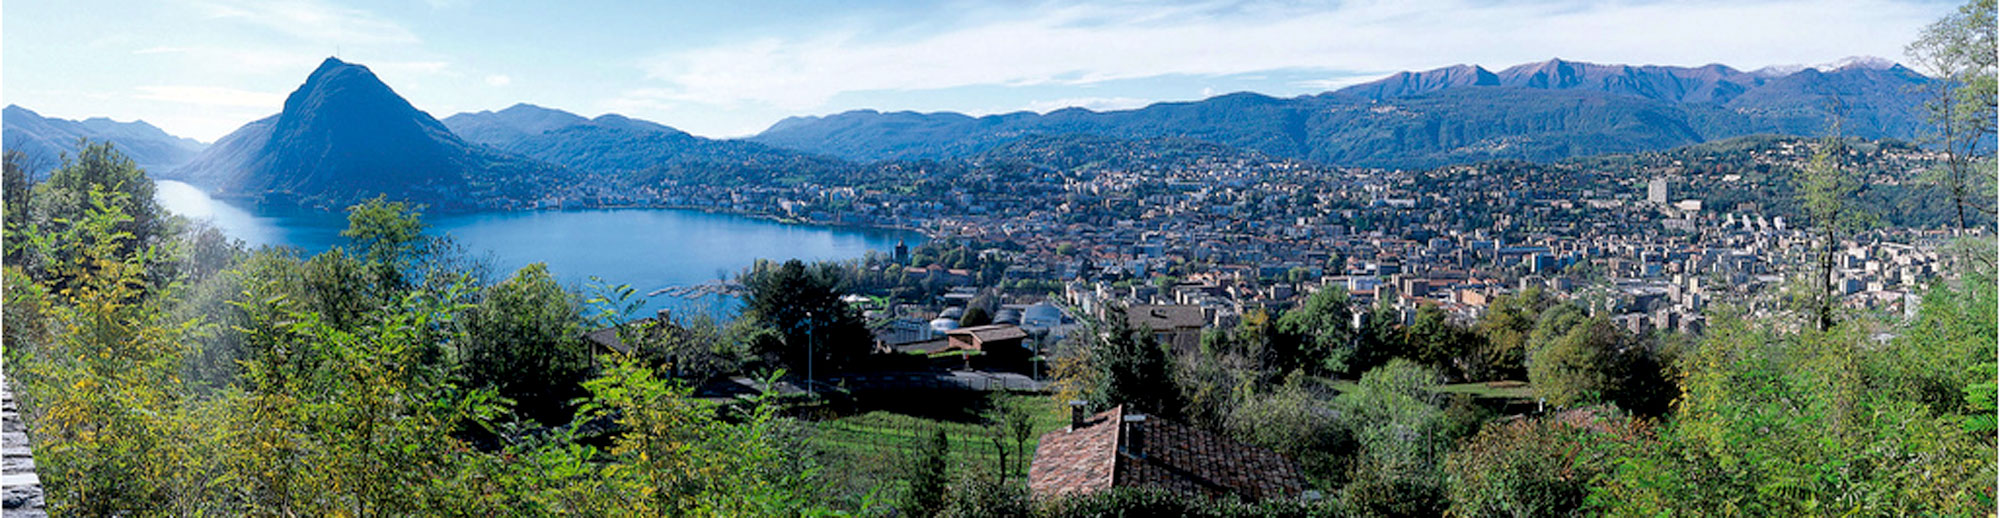 Svizzera - Lugano